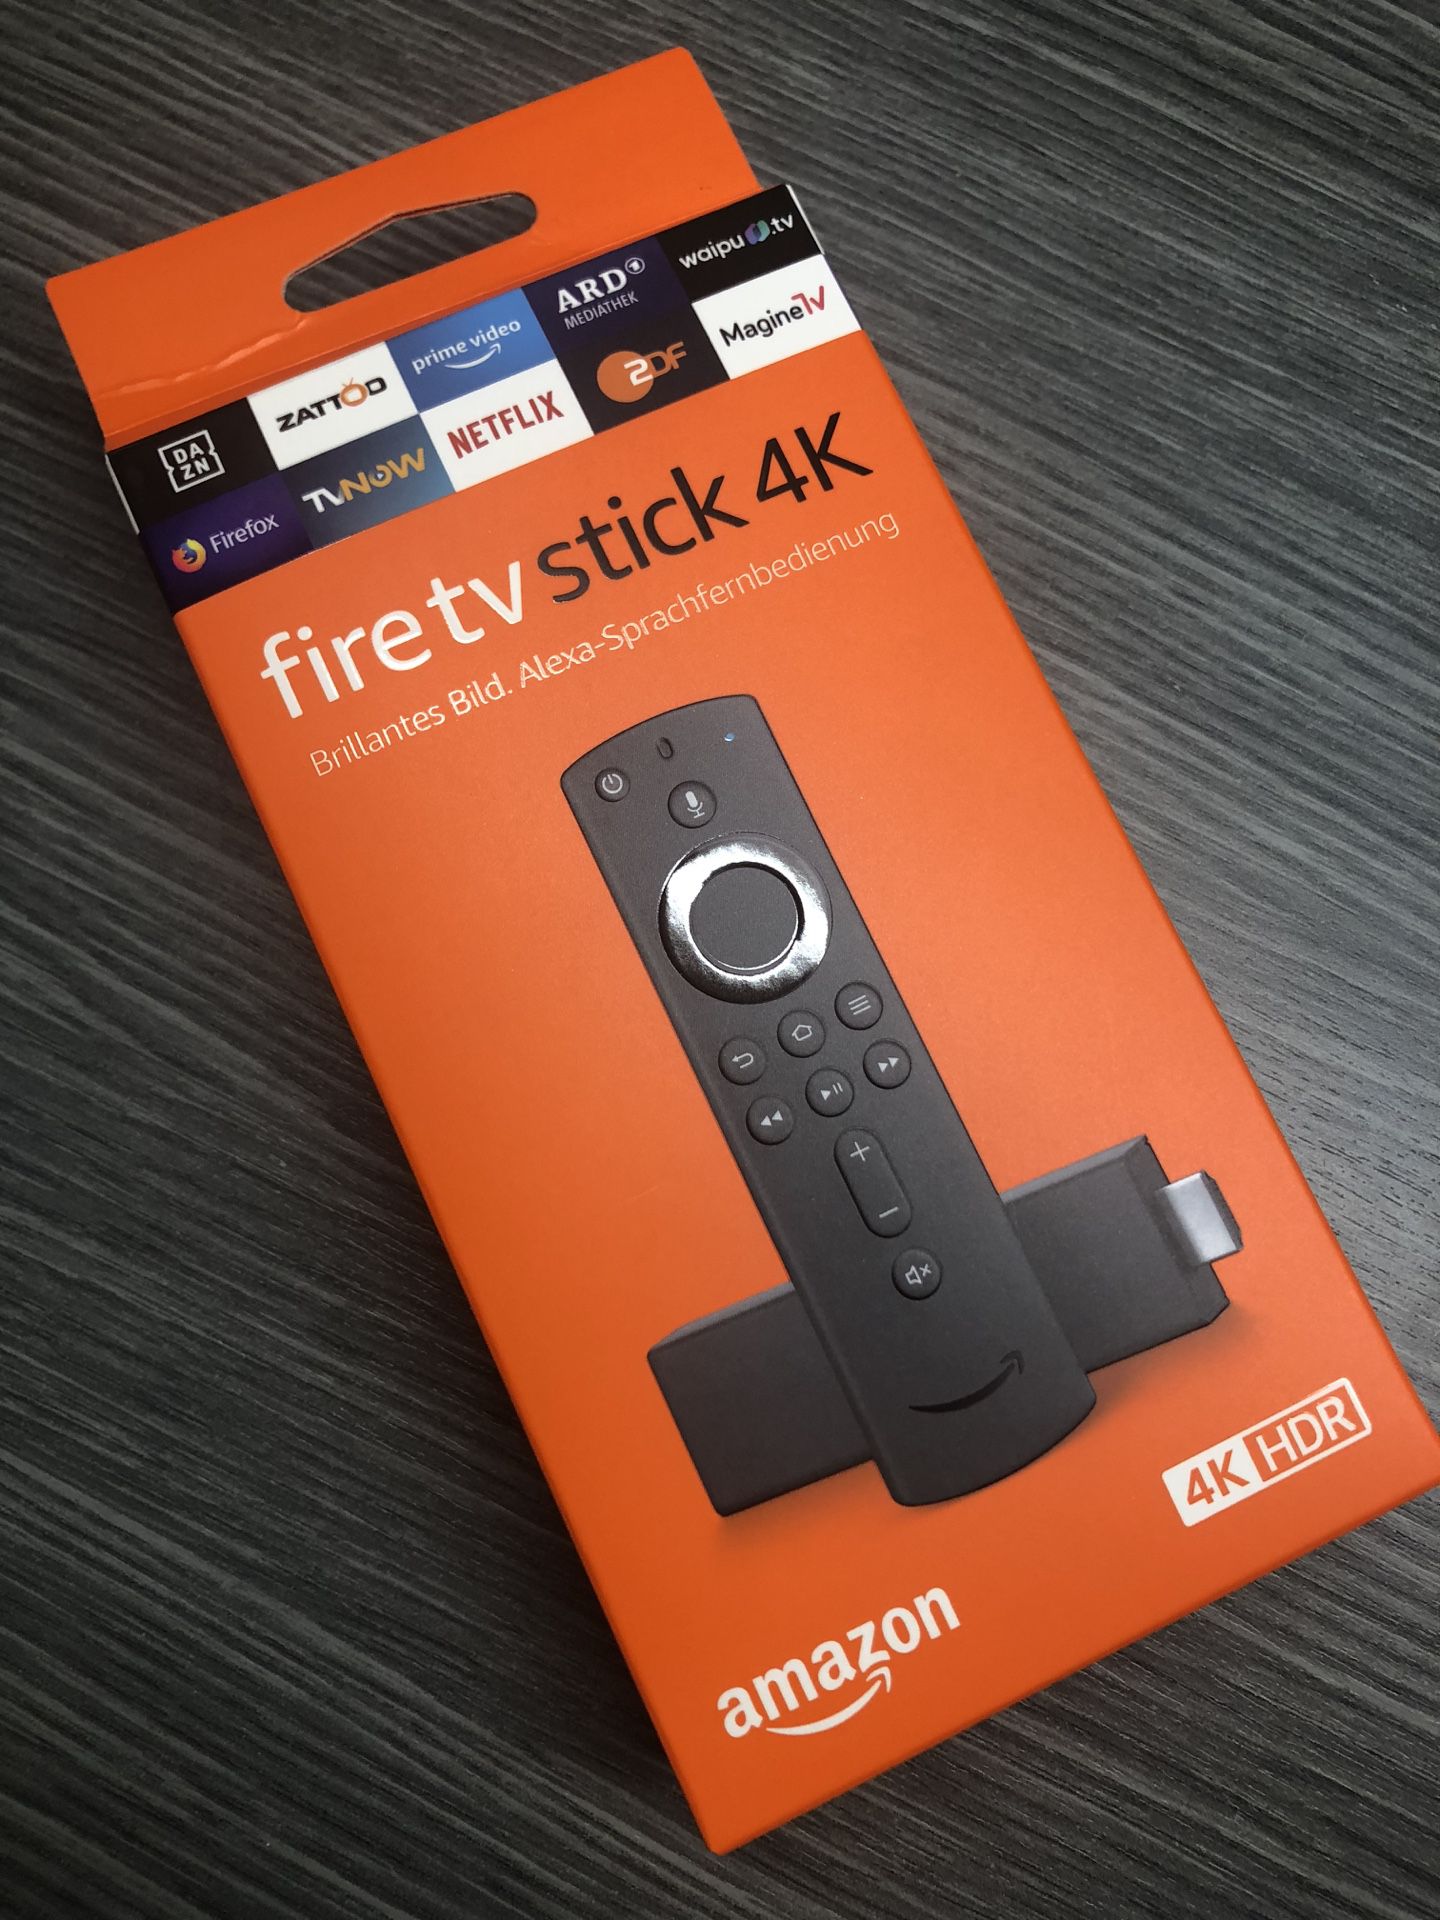 4K Amazon FireTV Stick 2019